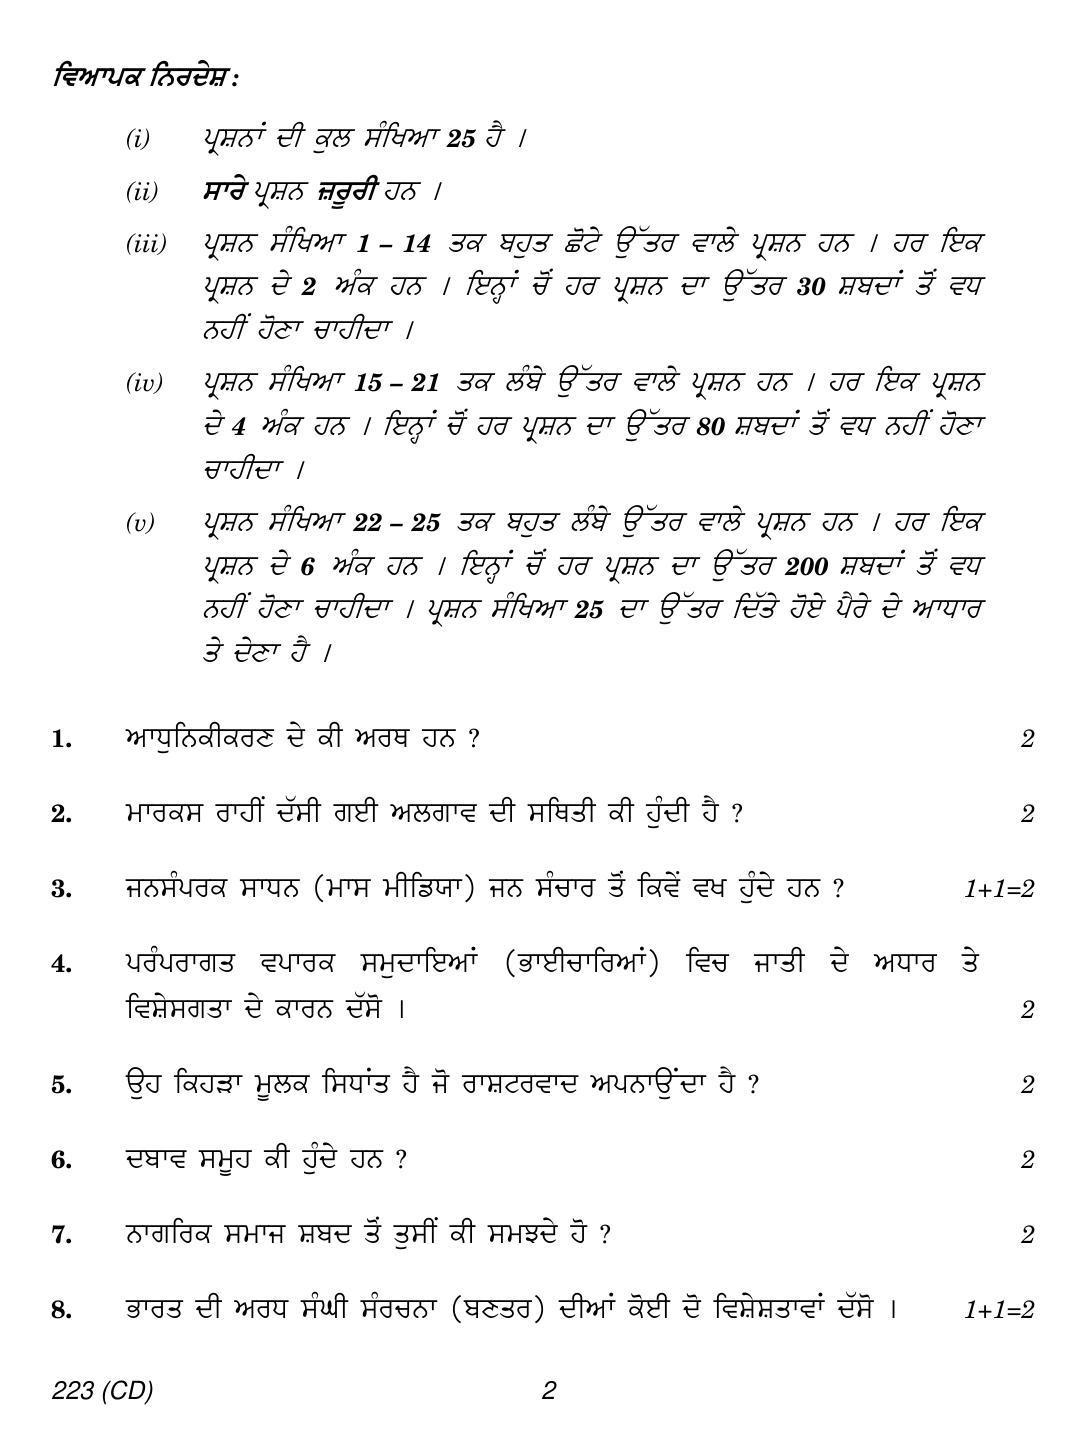 CBSE Class 12 223 (Sociology Punjabi CD) 2018 Question Paper - Page 2